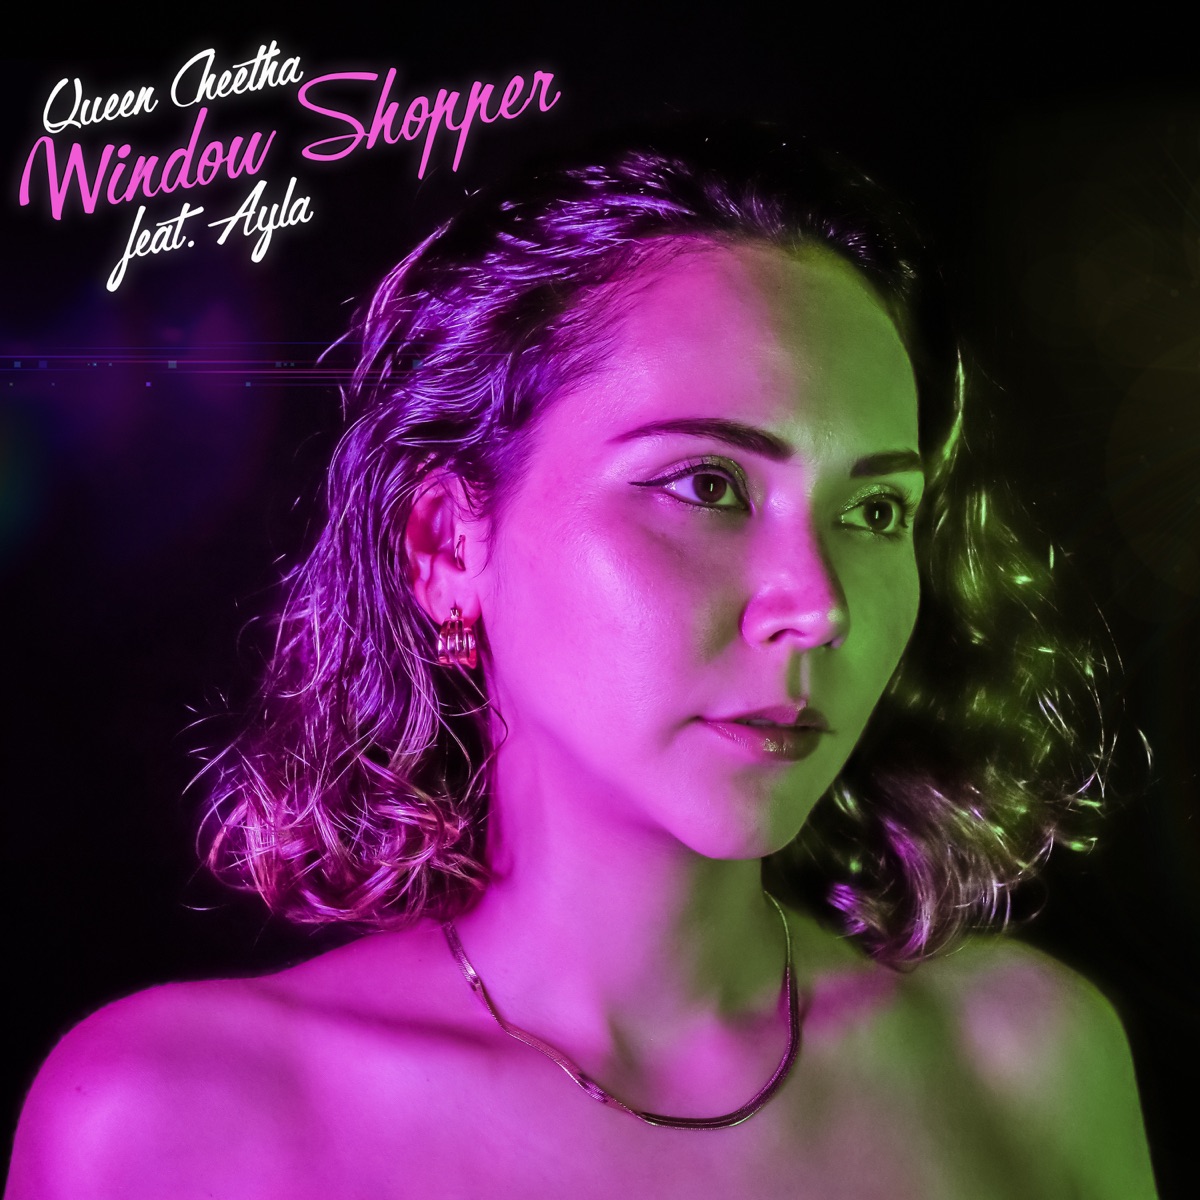 Window Shopper (feat. Ayla) - Single - Album by Queen Cheetha - Apple Music